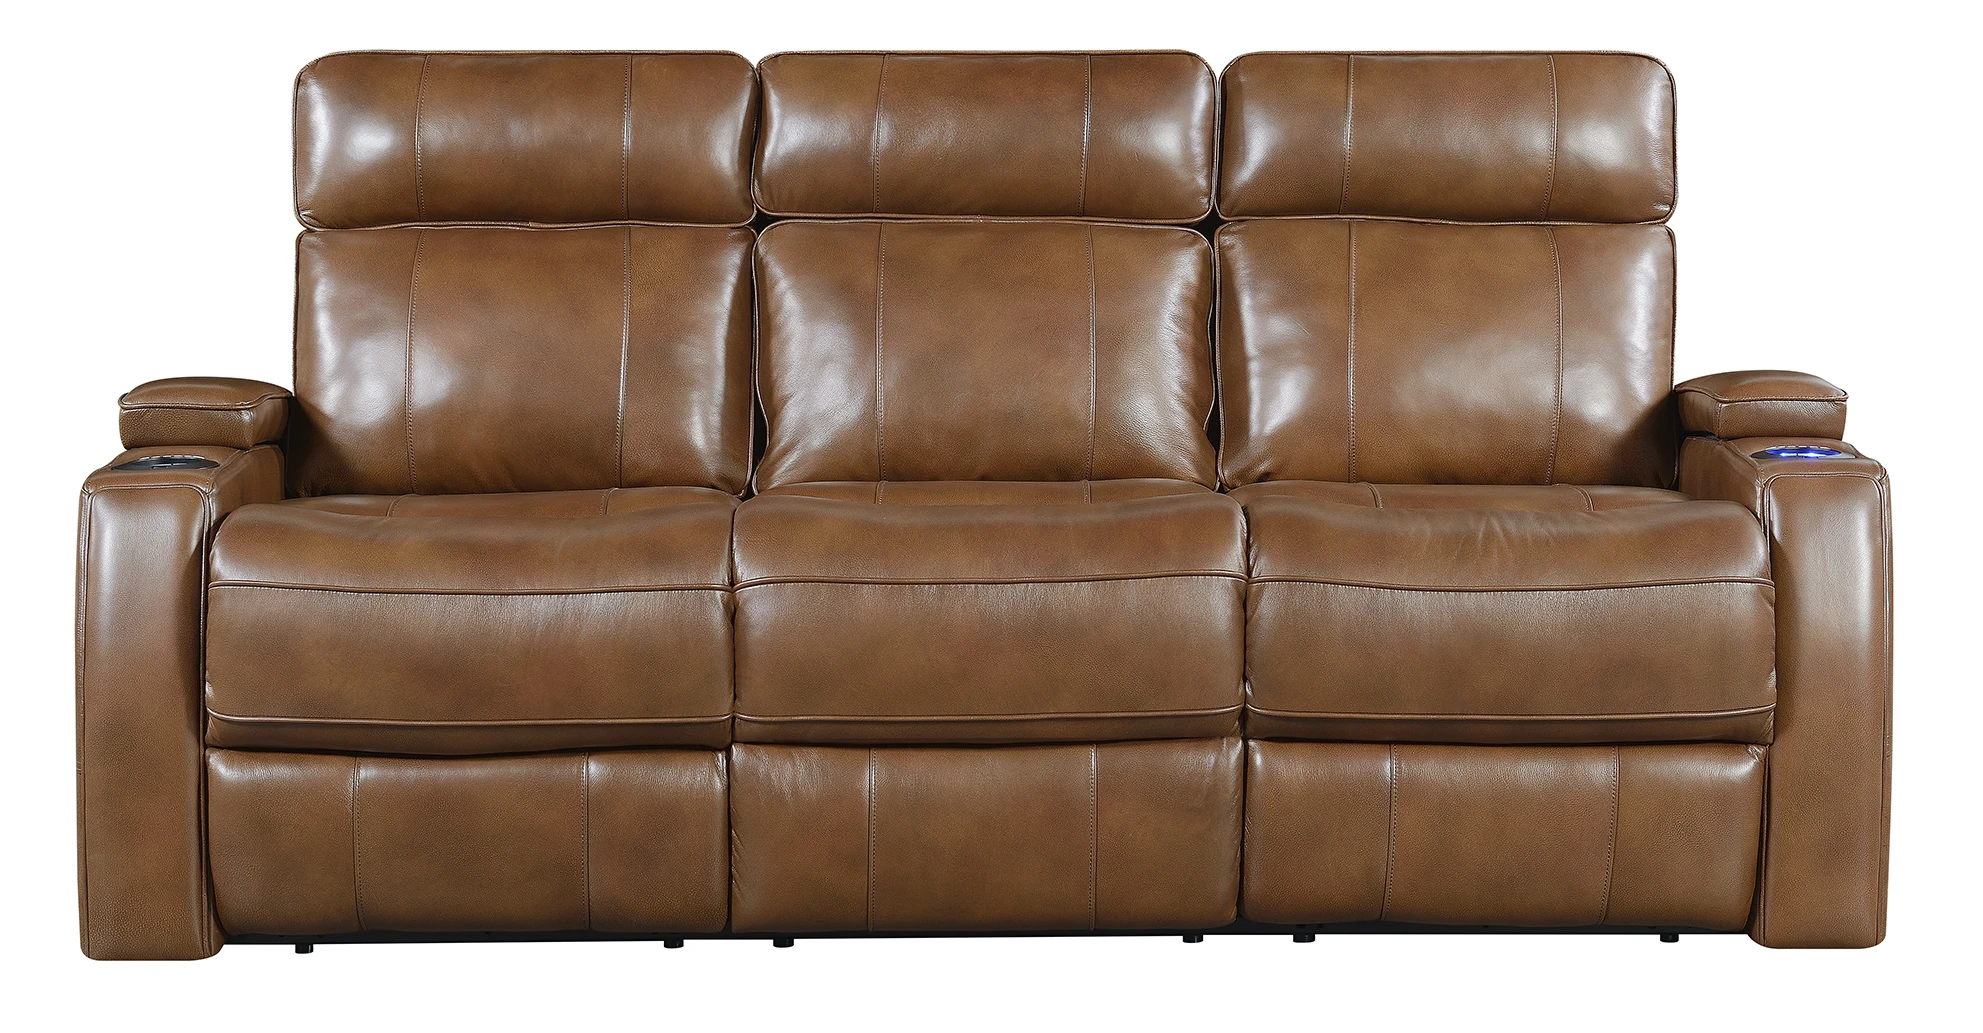 China professional furniture modern luxury recliner sofa